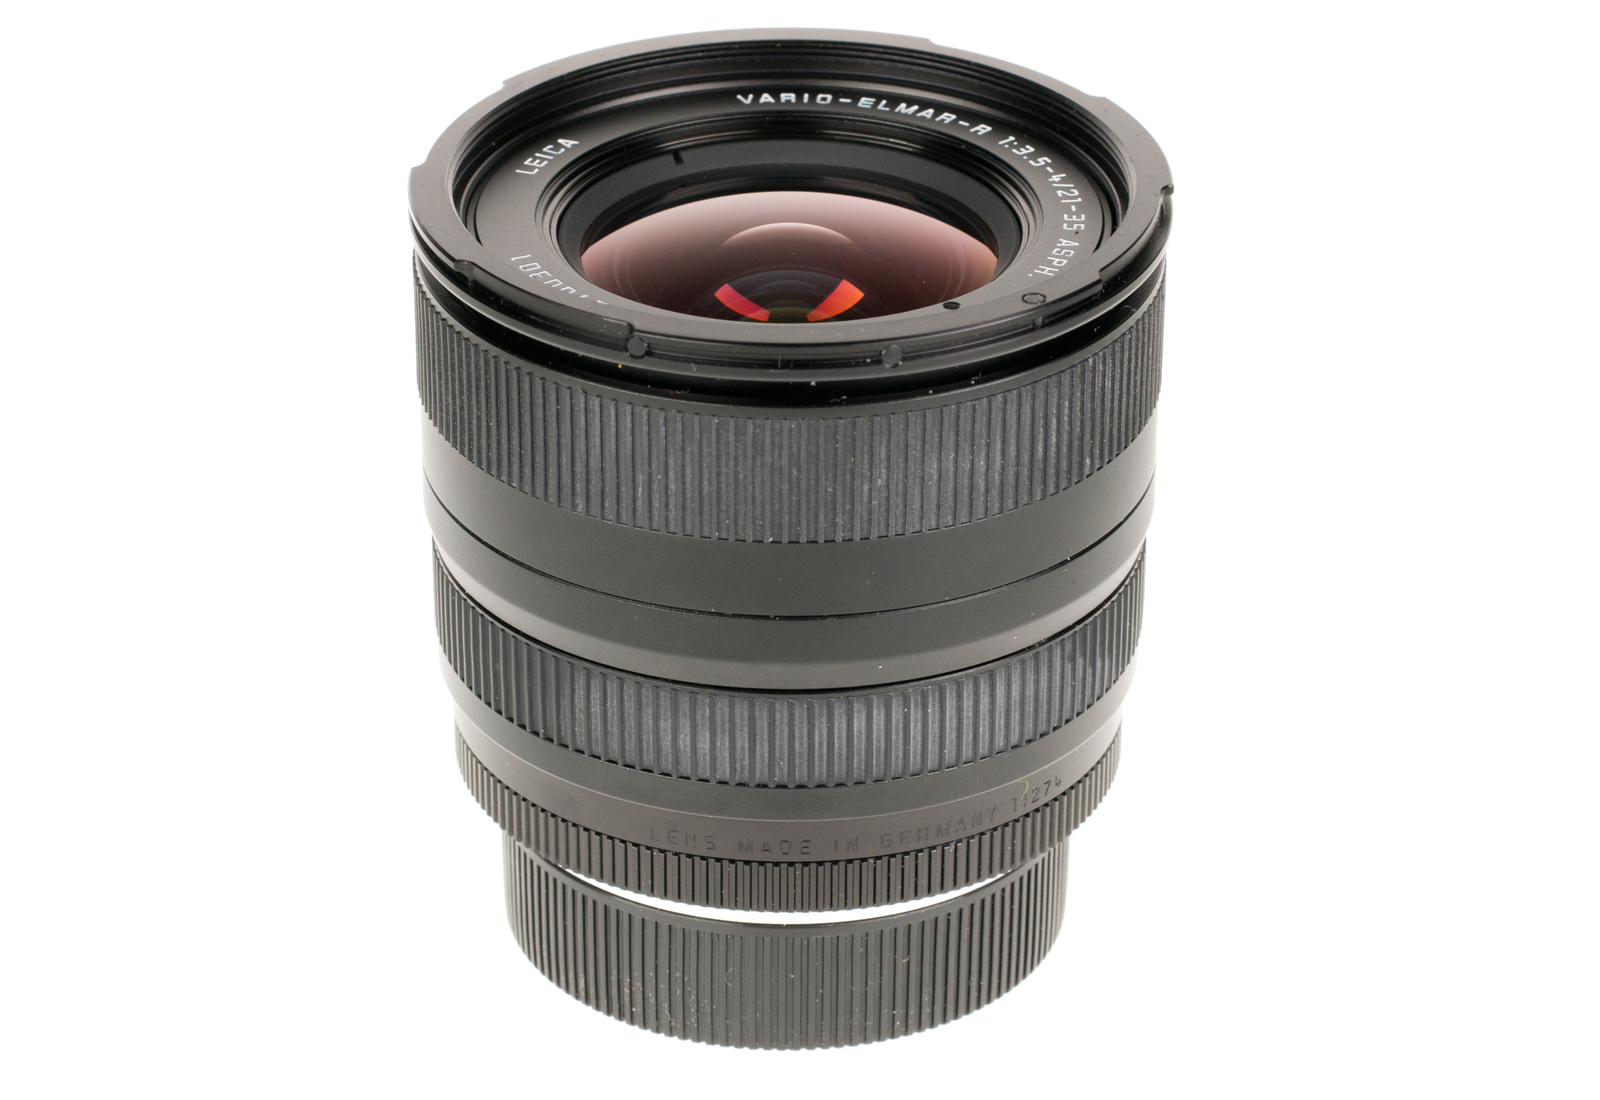 Leica VARIO-ELMAR-R 1:3,5-4,0/21-35mm ASPH. ROM 11274